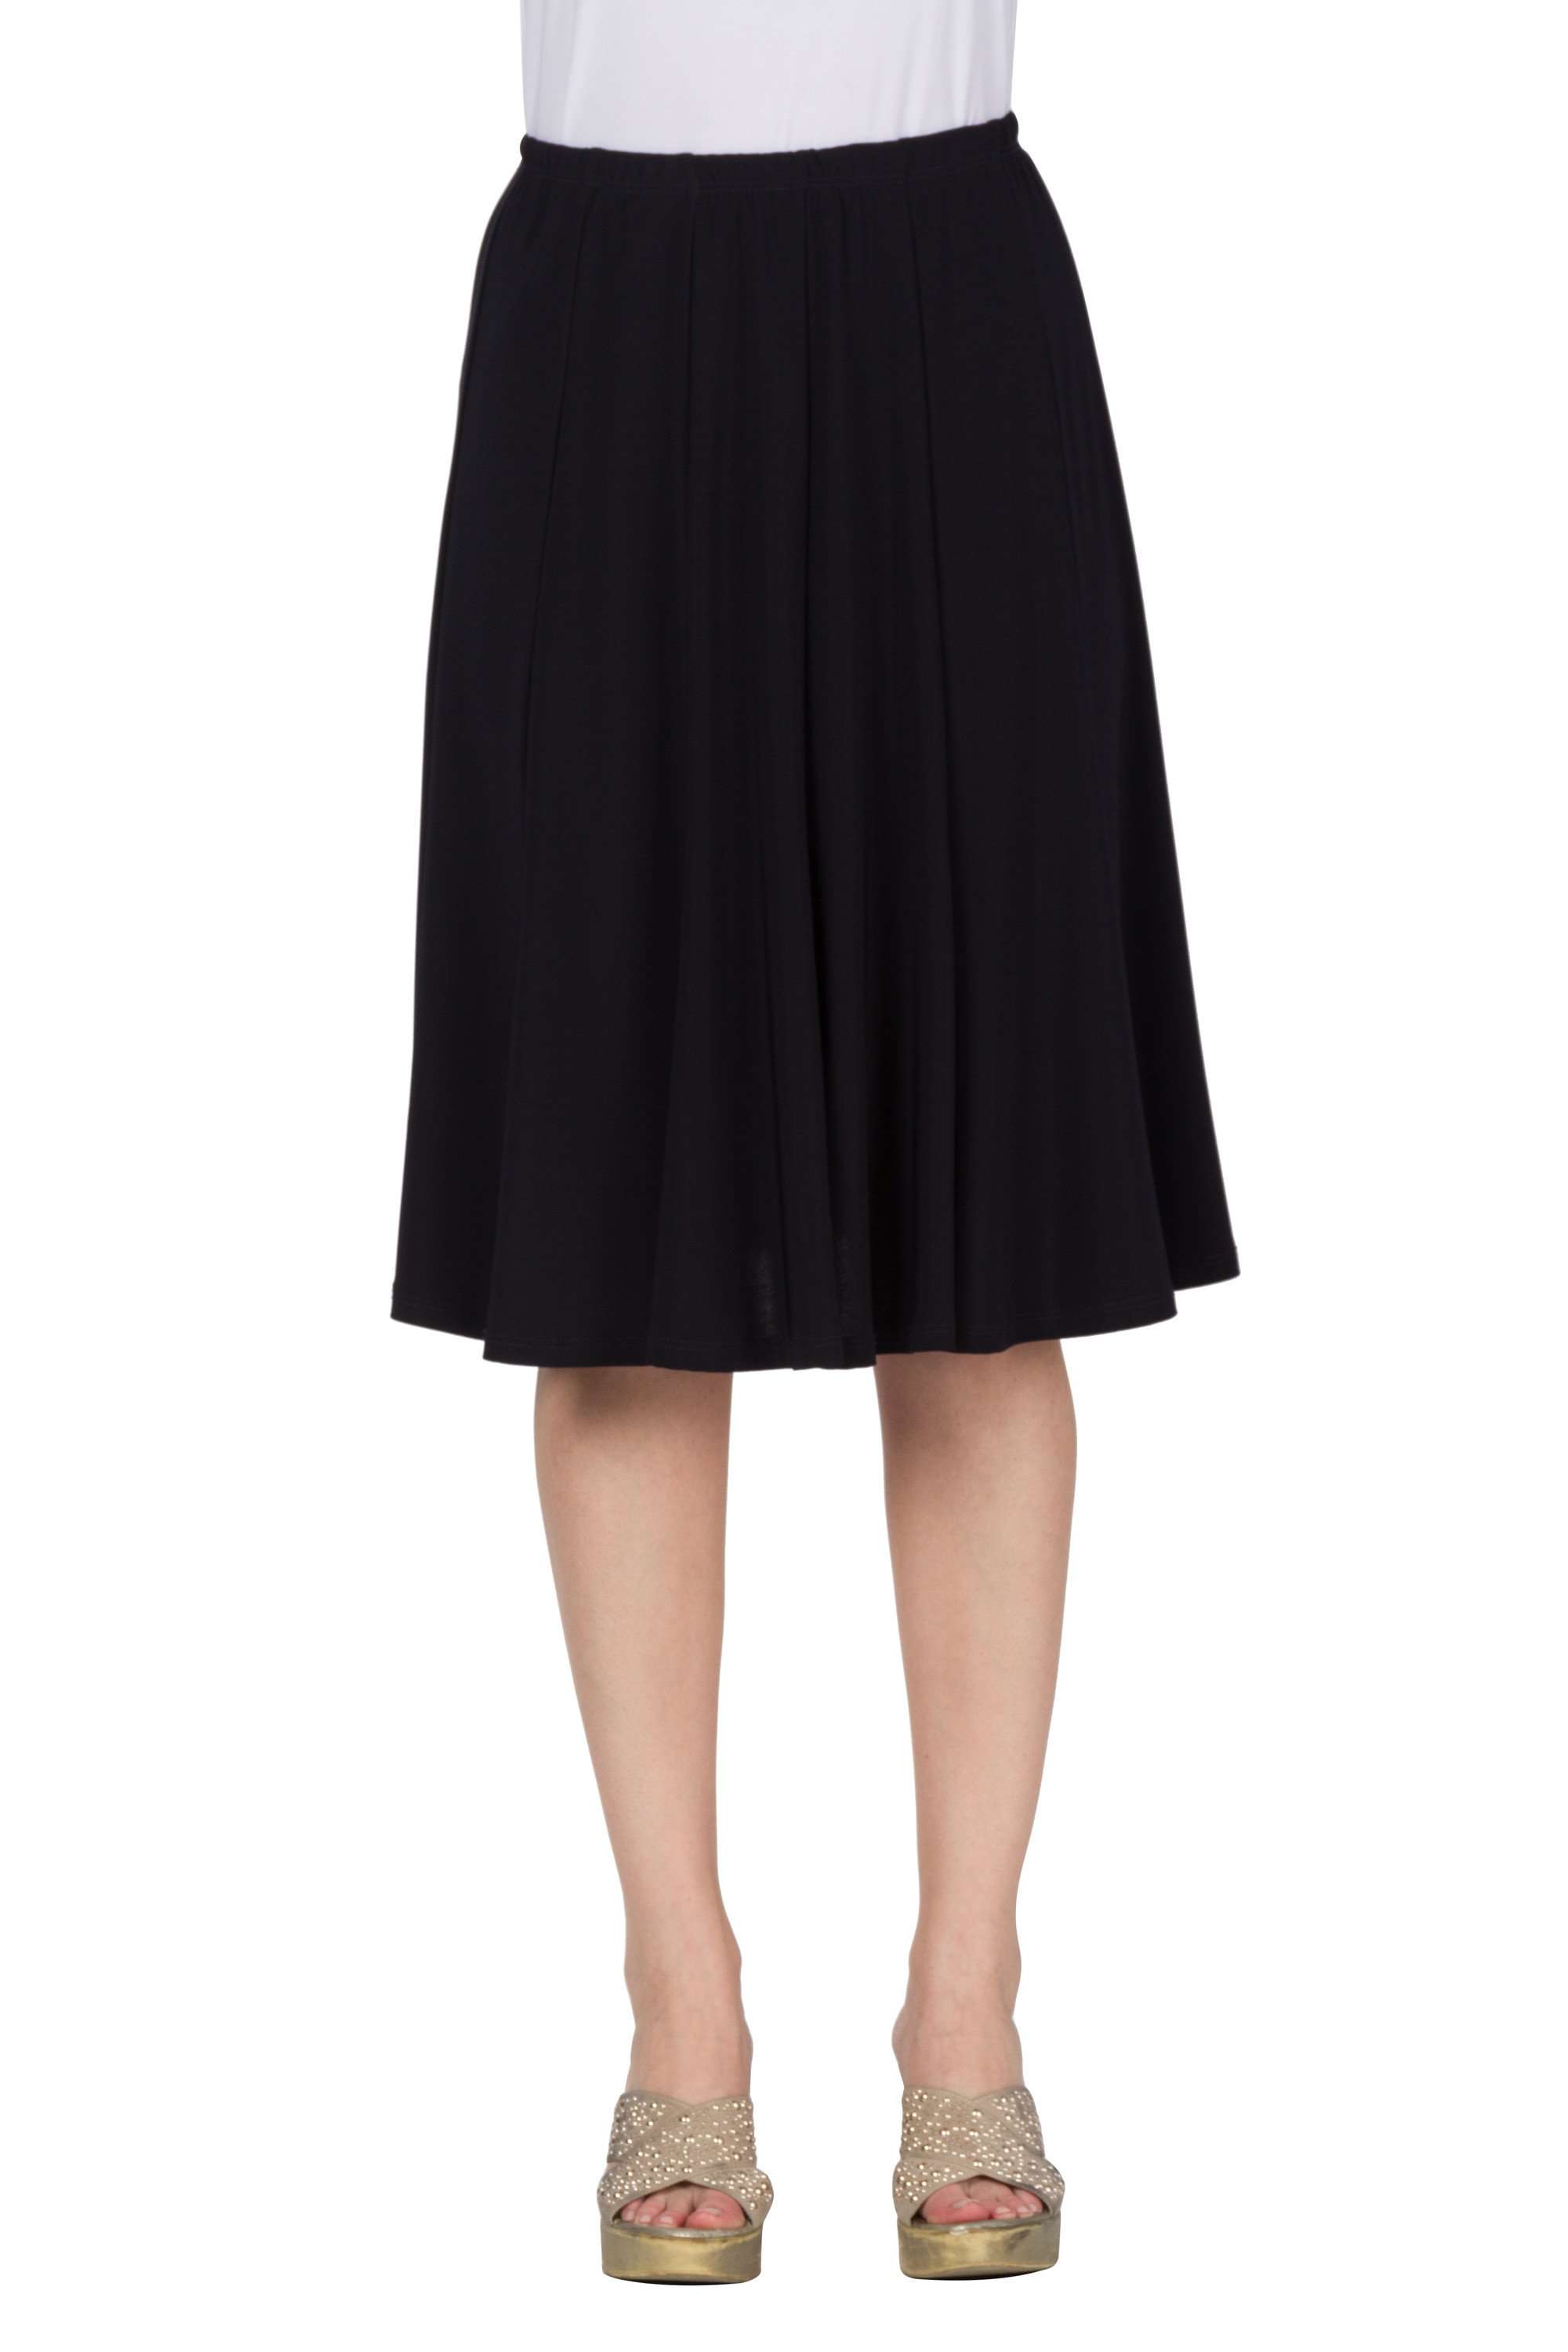 Women's Skirts Canada | Navy Skirt Flared | XL Sizes | YM Style